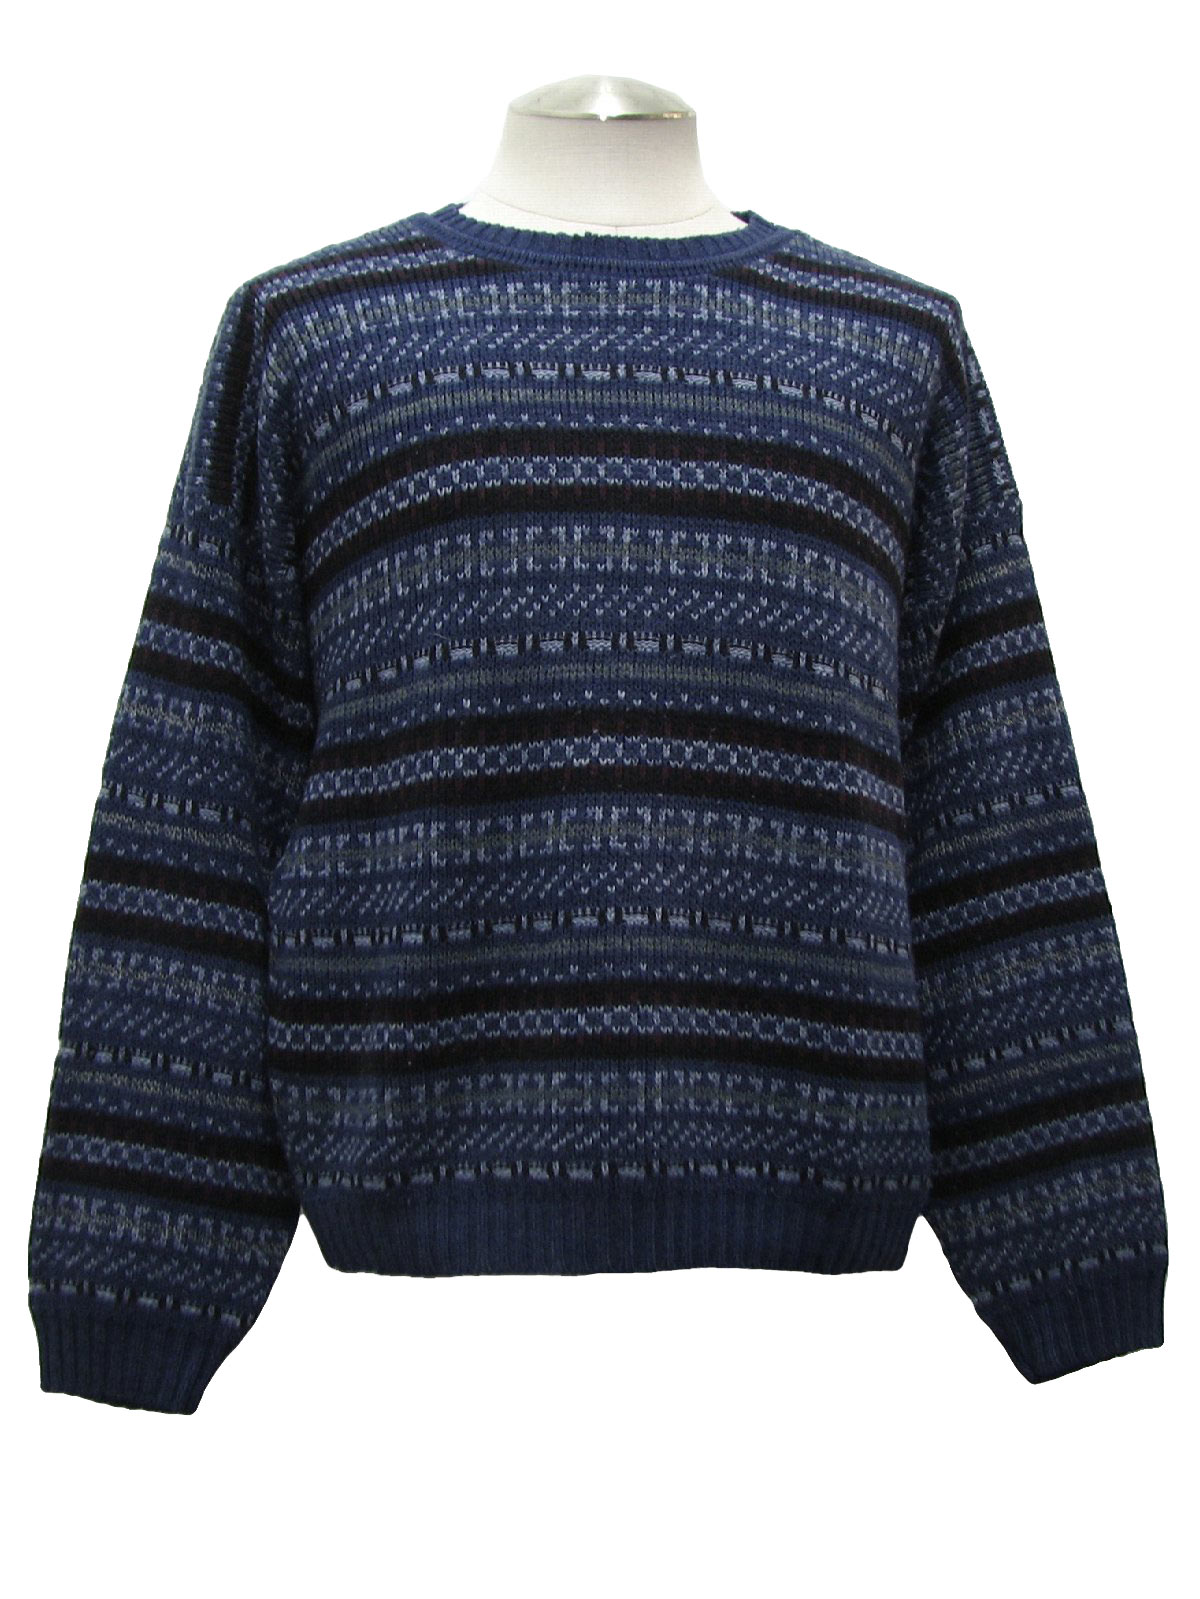 David Taylor 80's Vintage Sweater: 80s -David Taylor- Mens blue, black ...